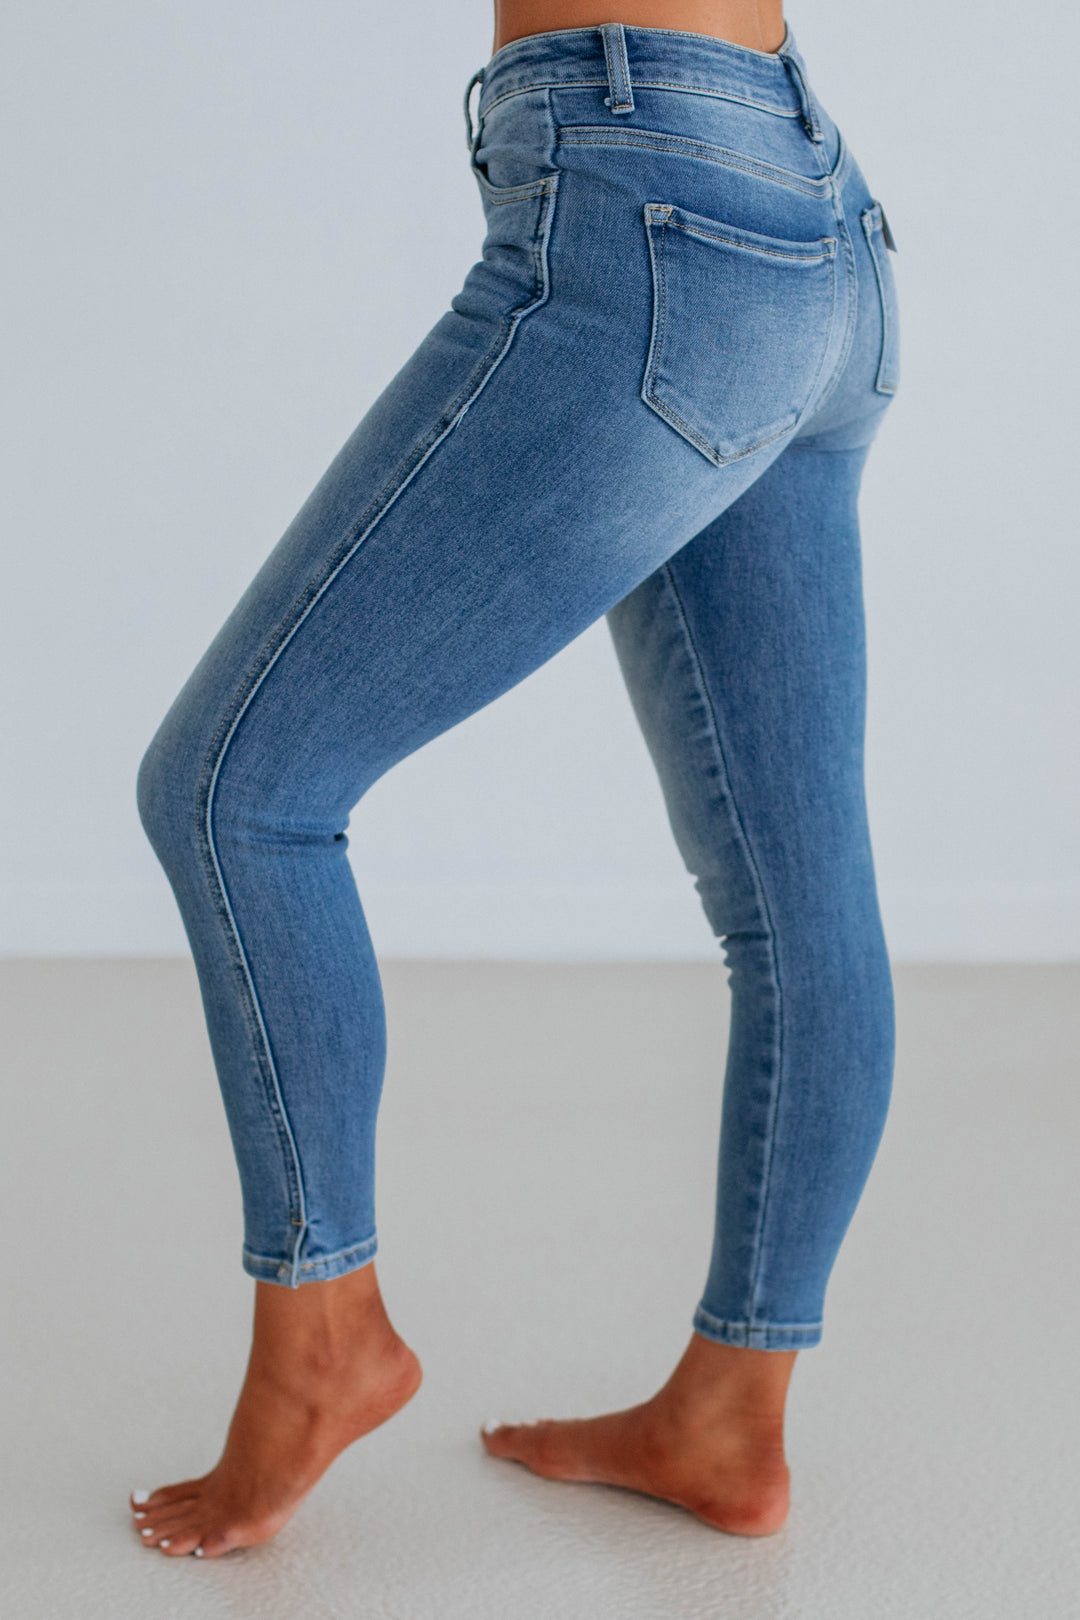 Missy Risen Jeans